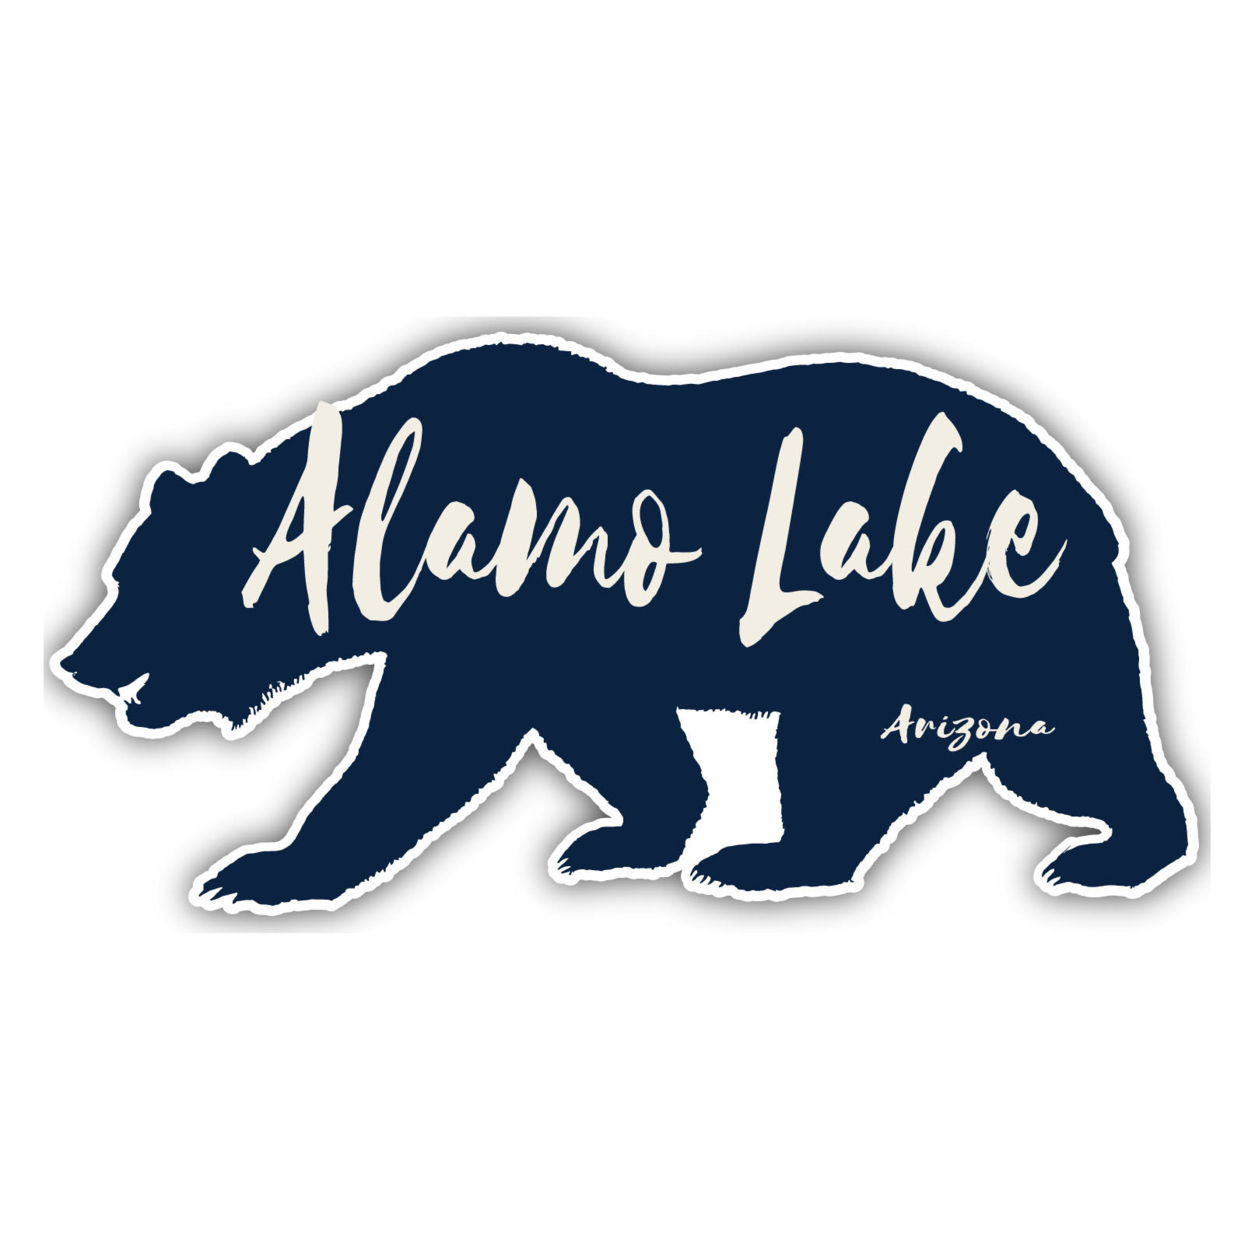 Alamo Lake Arizona Souvenir Decorative Stickers (Choose Theme And Size) - 4-Pack, 4-Inch, Camp Life